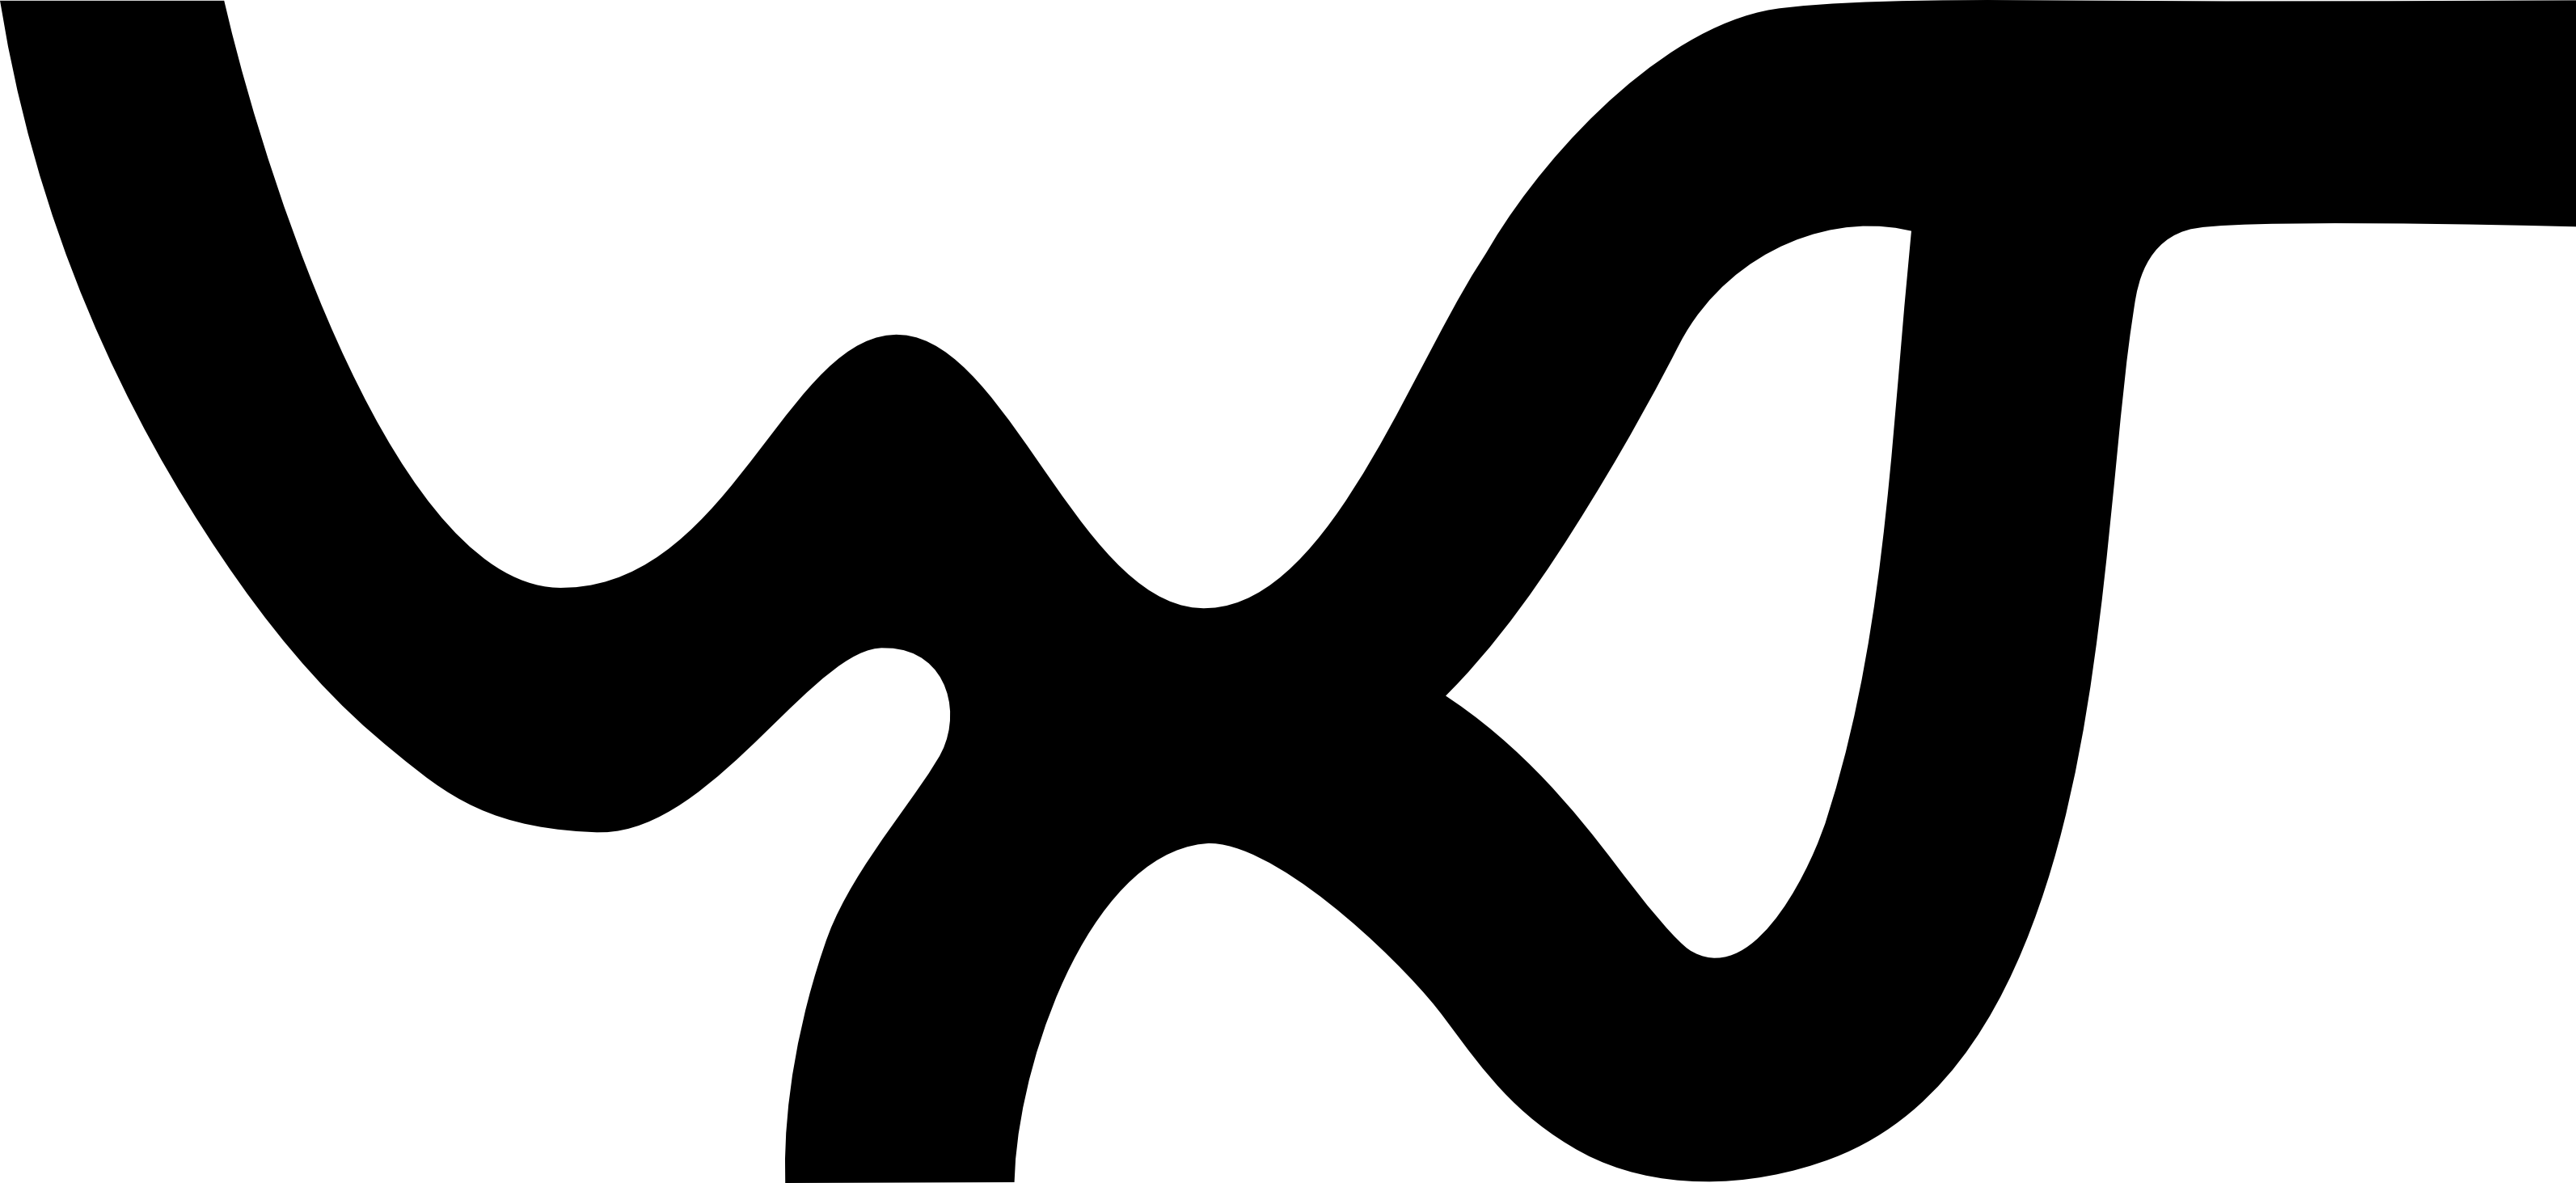 Page sign. UPC логотип. Картелл лого. Логотип Schwarz Toolkit. Code logo PNG.